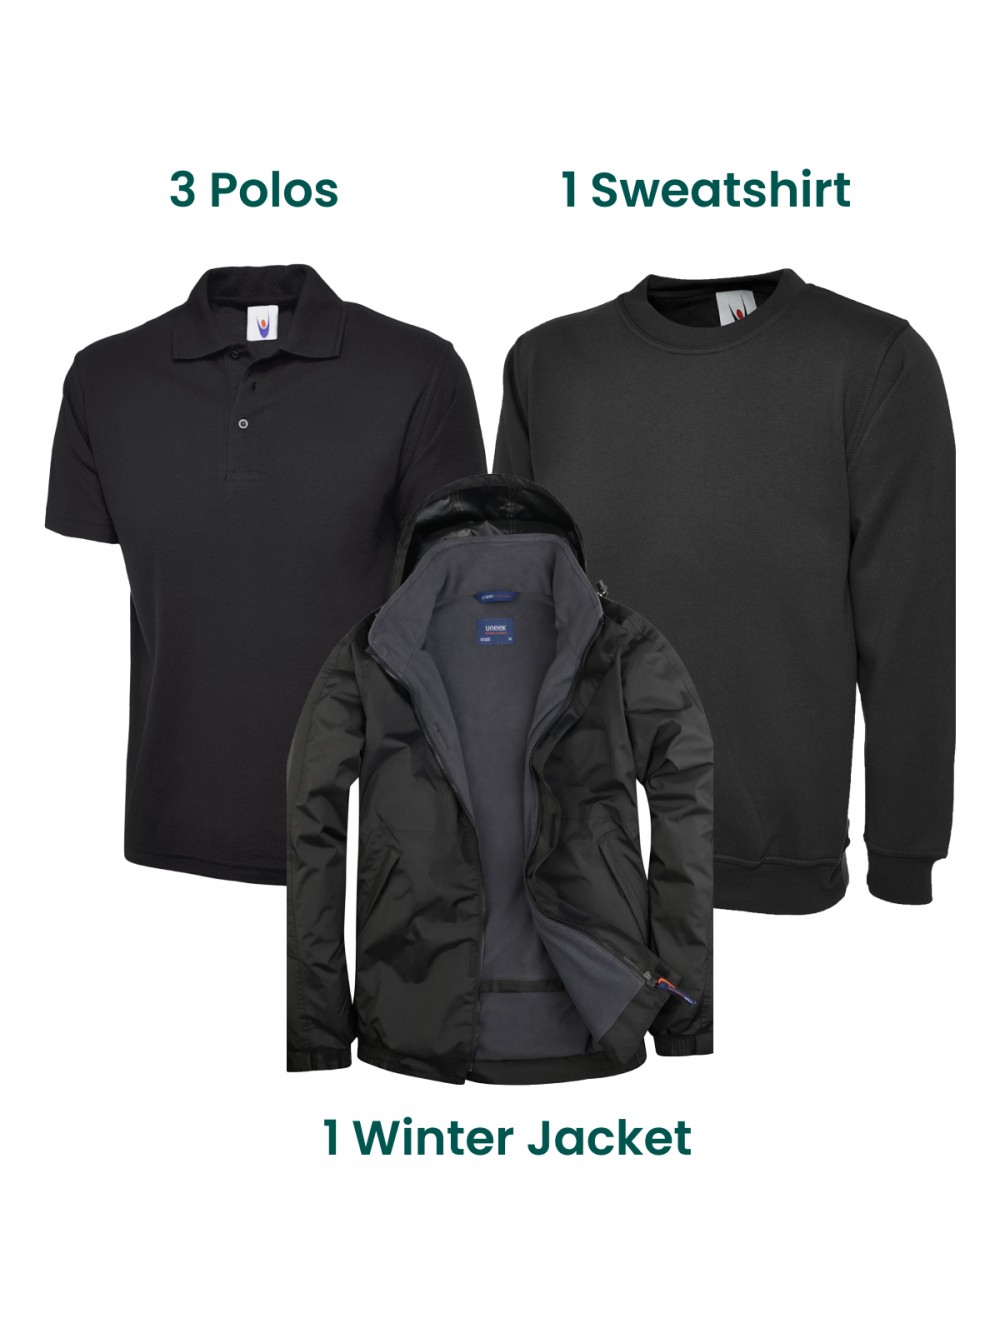 printed / embroidered workwear bundle- 3 polos 1 sweatshirt 1 winter jacket